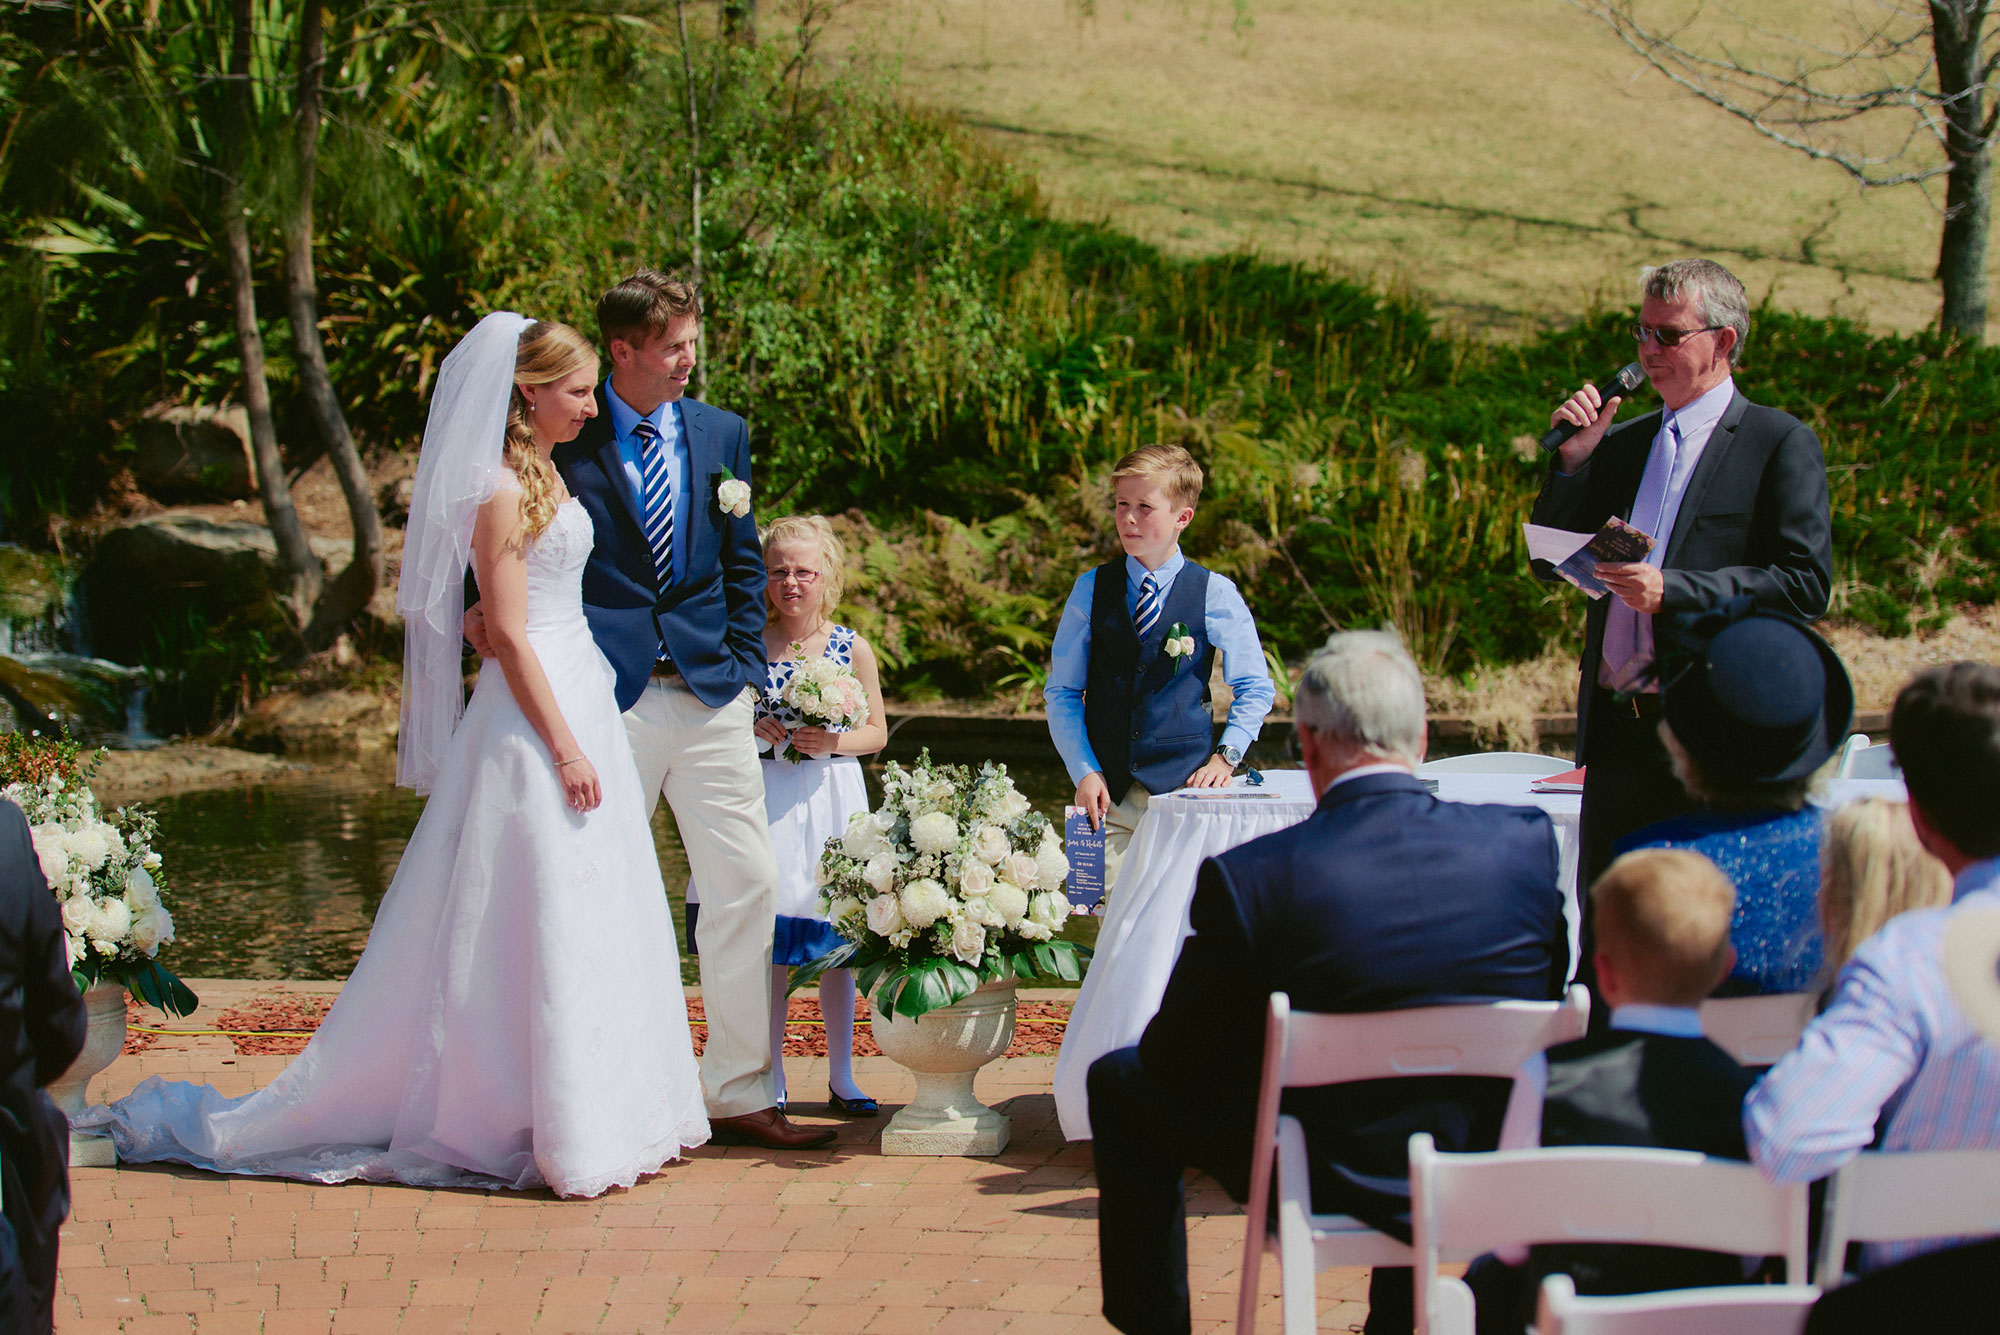 Wedding service at Fairmont Resort Blue Mountains